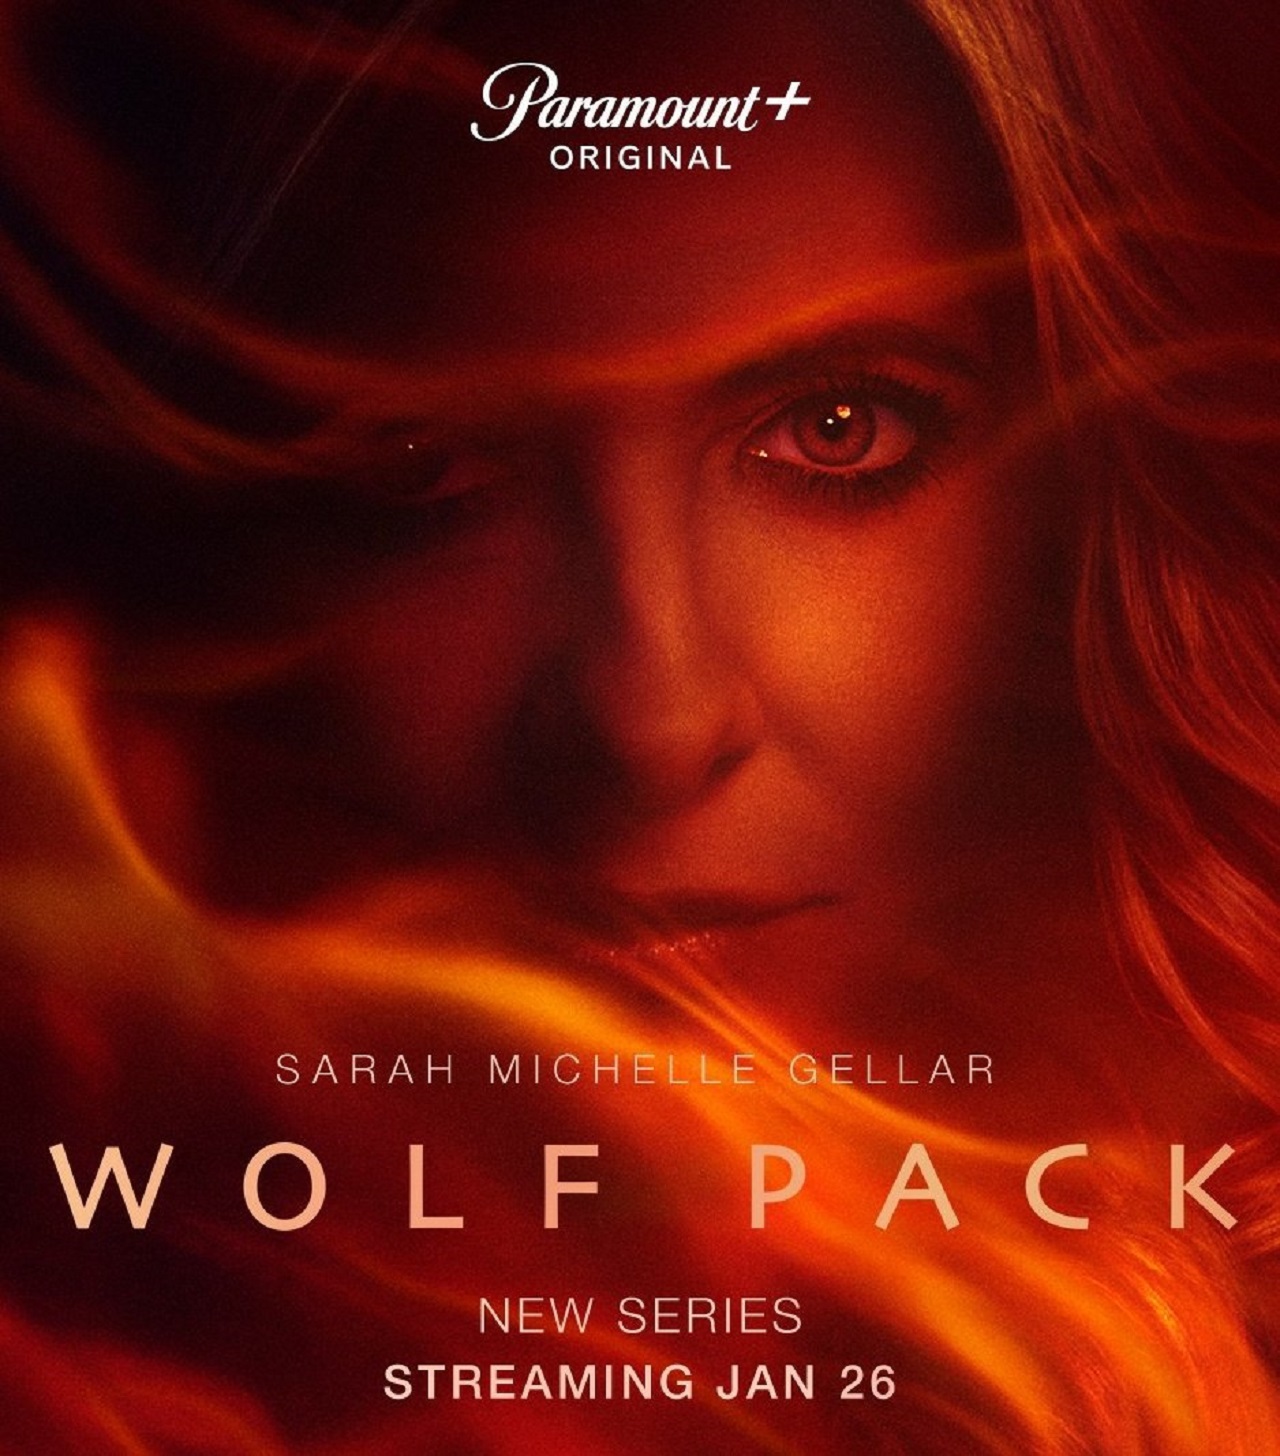 Wolf Pack: Sarah Michelle Gellar-Starrer Drops Official Series Trailer | Flipboard